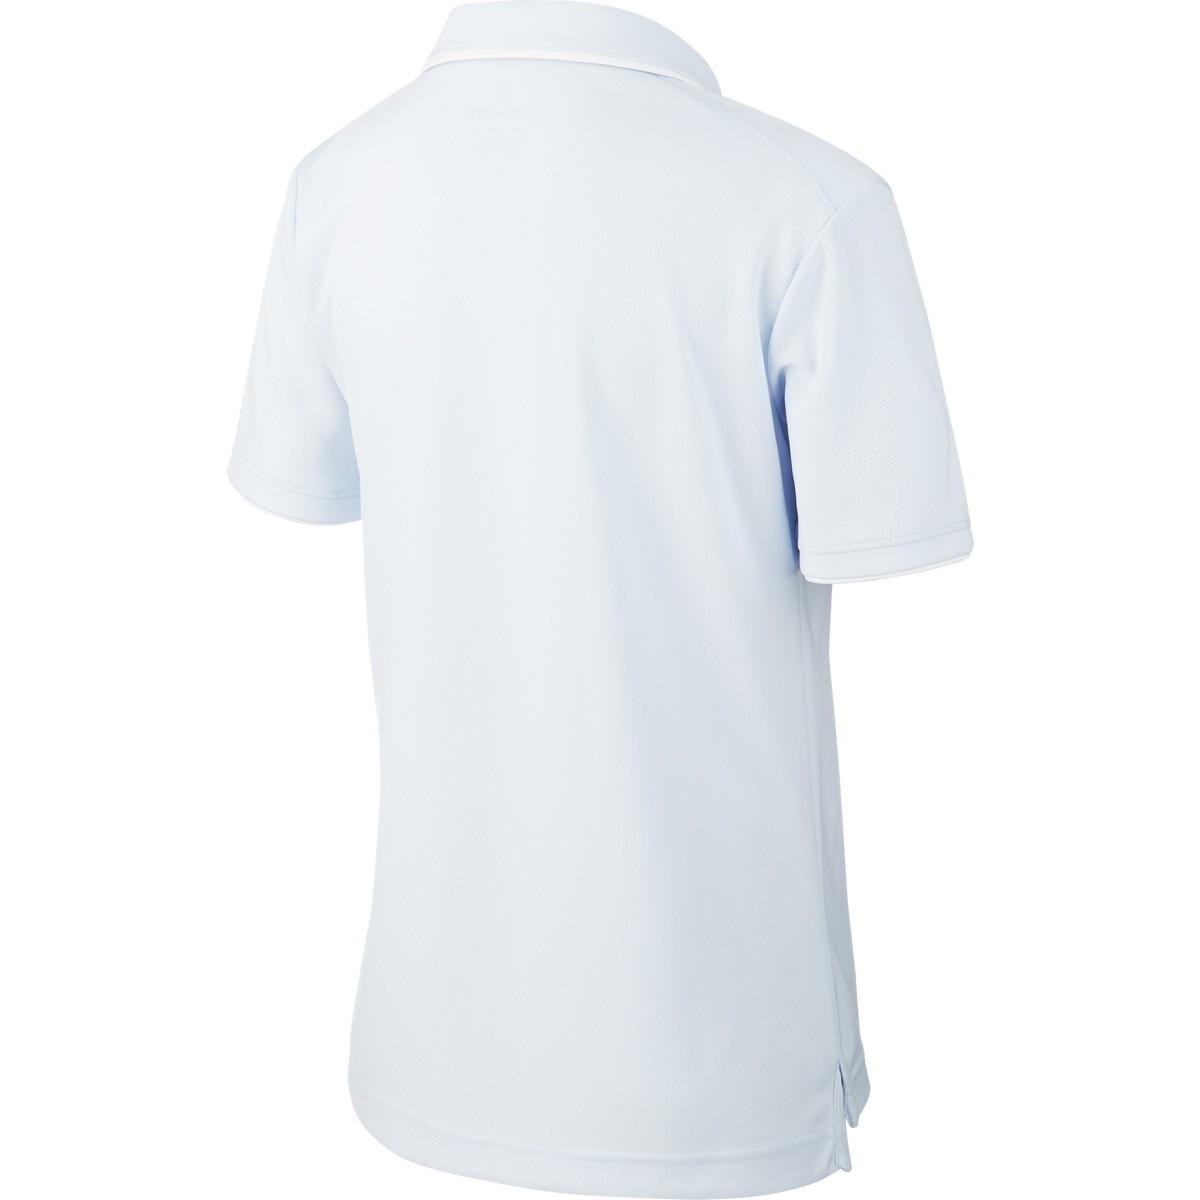 Теннисная футболка детская Nike Court Dry Polo light blue поло